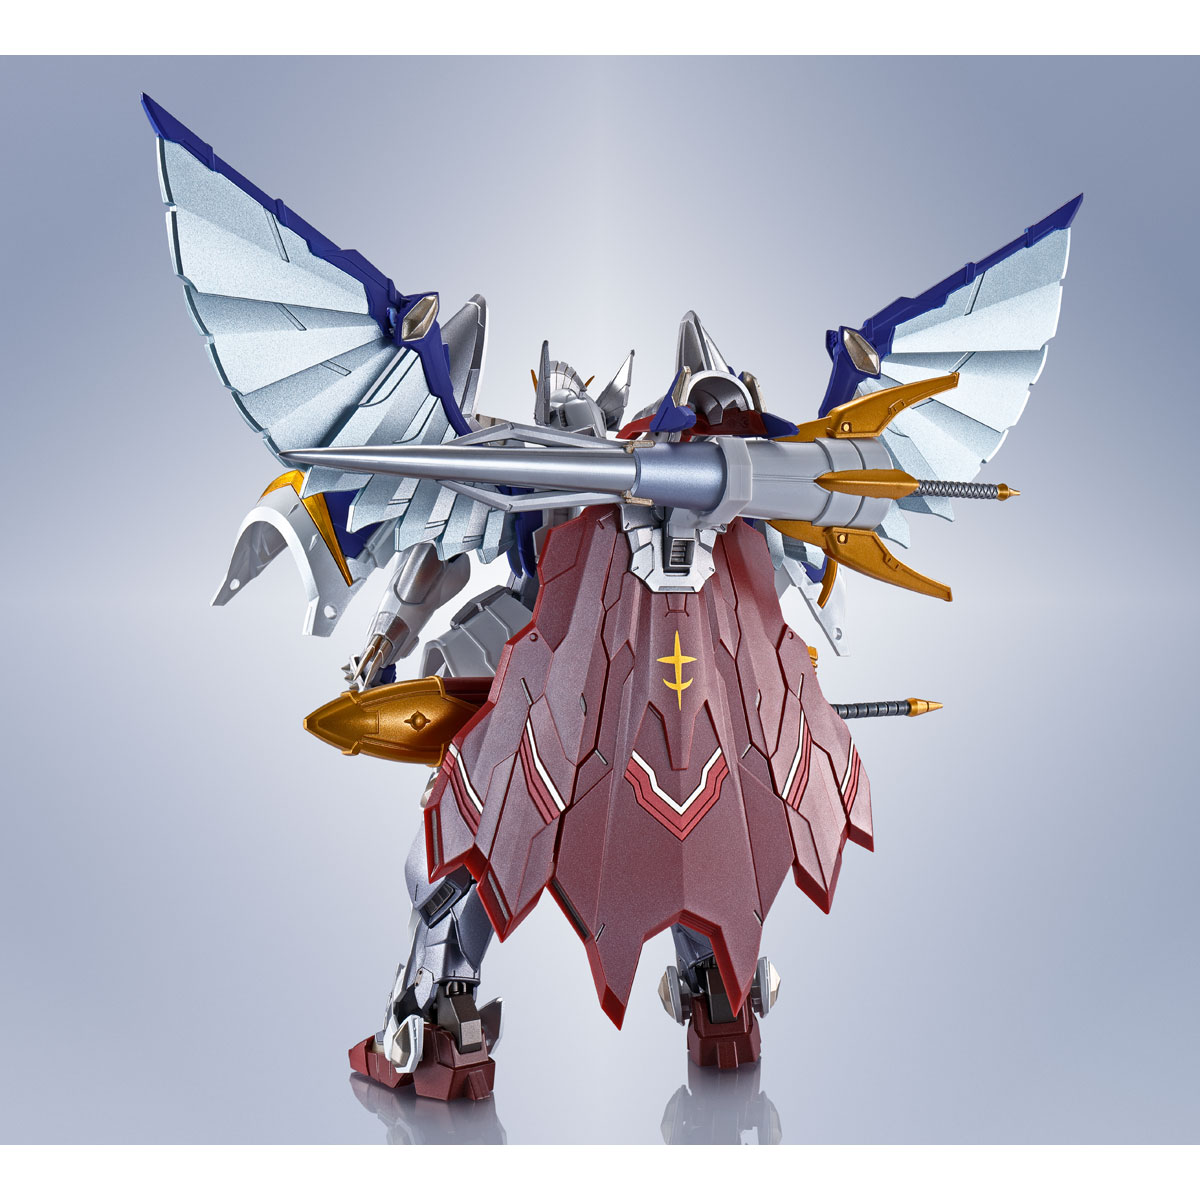 Metal Robot Spirits Side Ms Versal Knight Gundam Real Type Ver Gundam Premium Bandai Usa Online Store For Action Figures Model Kits Toys And More